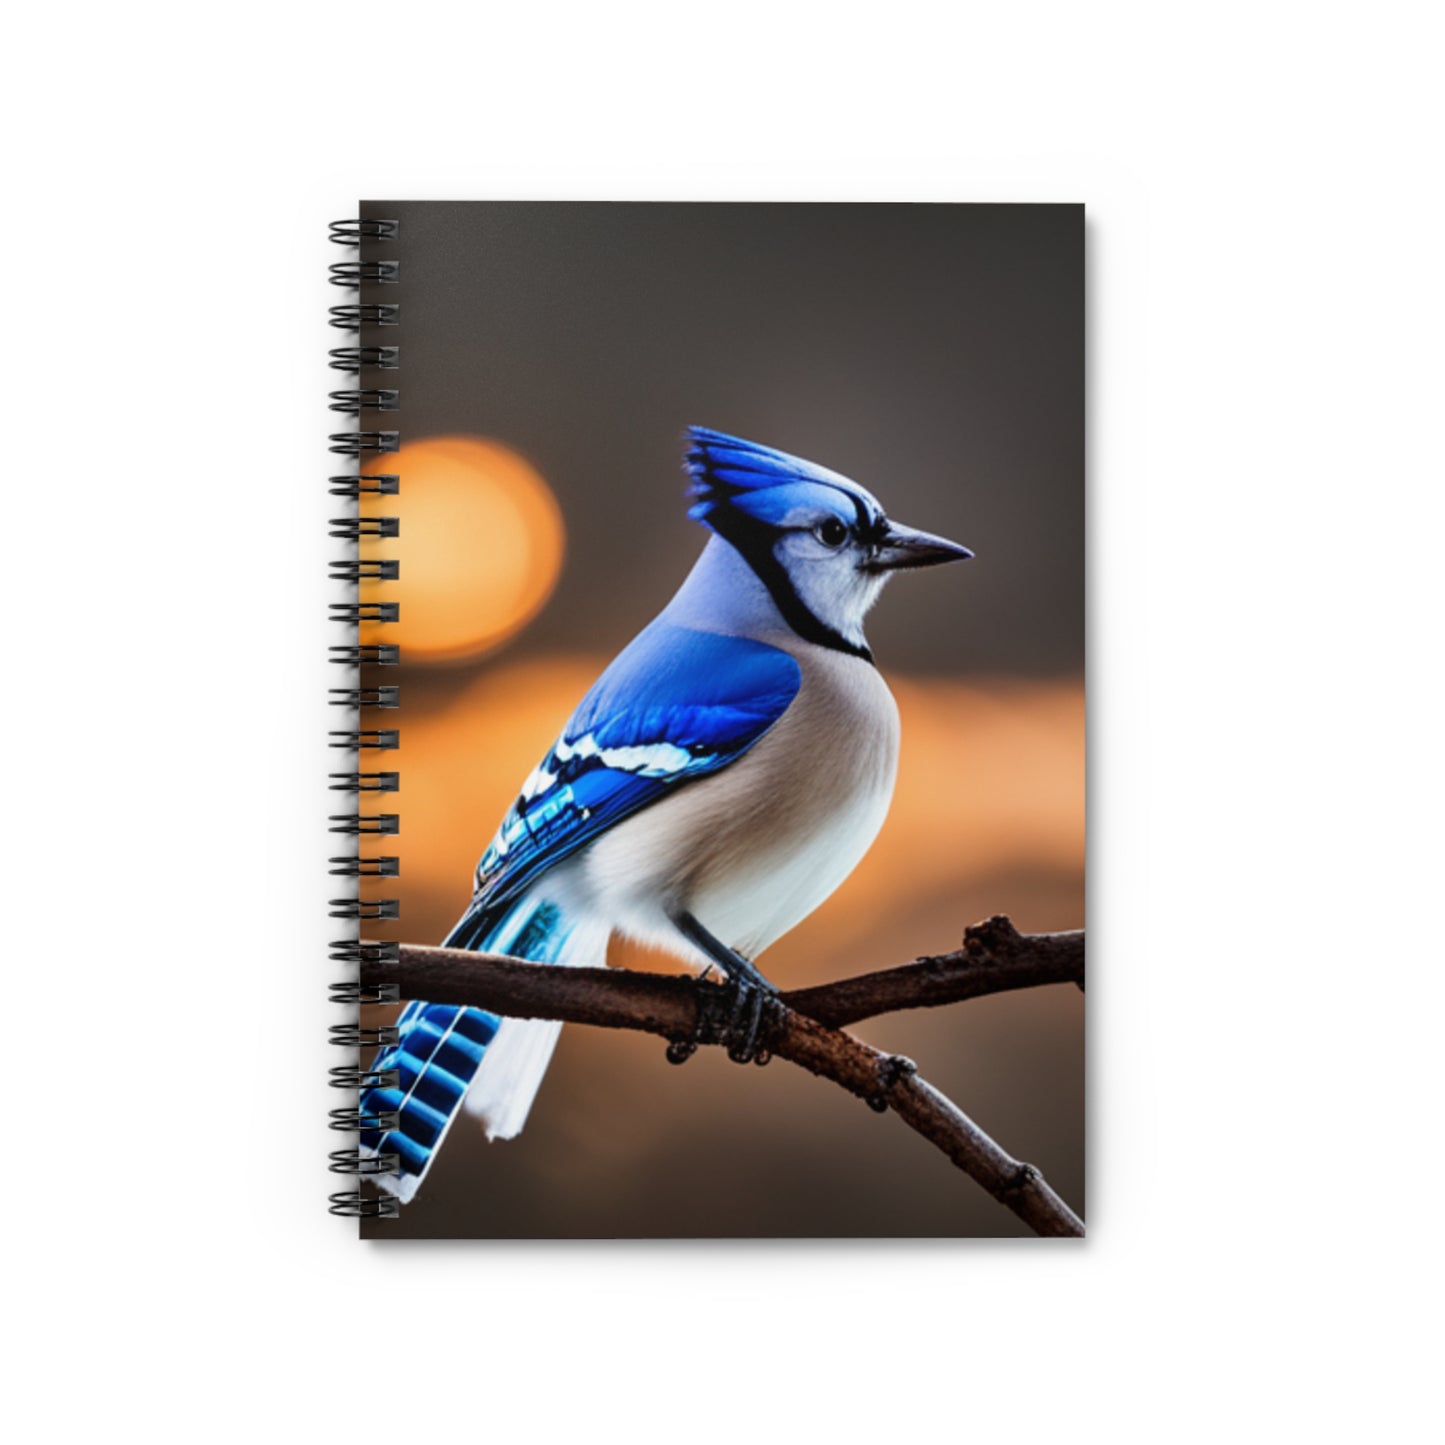 Blue Jay Spiral Notebook - Ruled Line